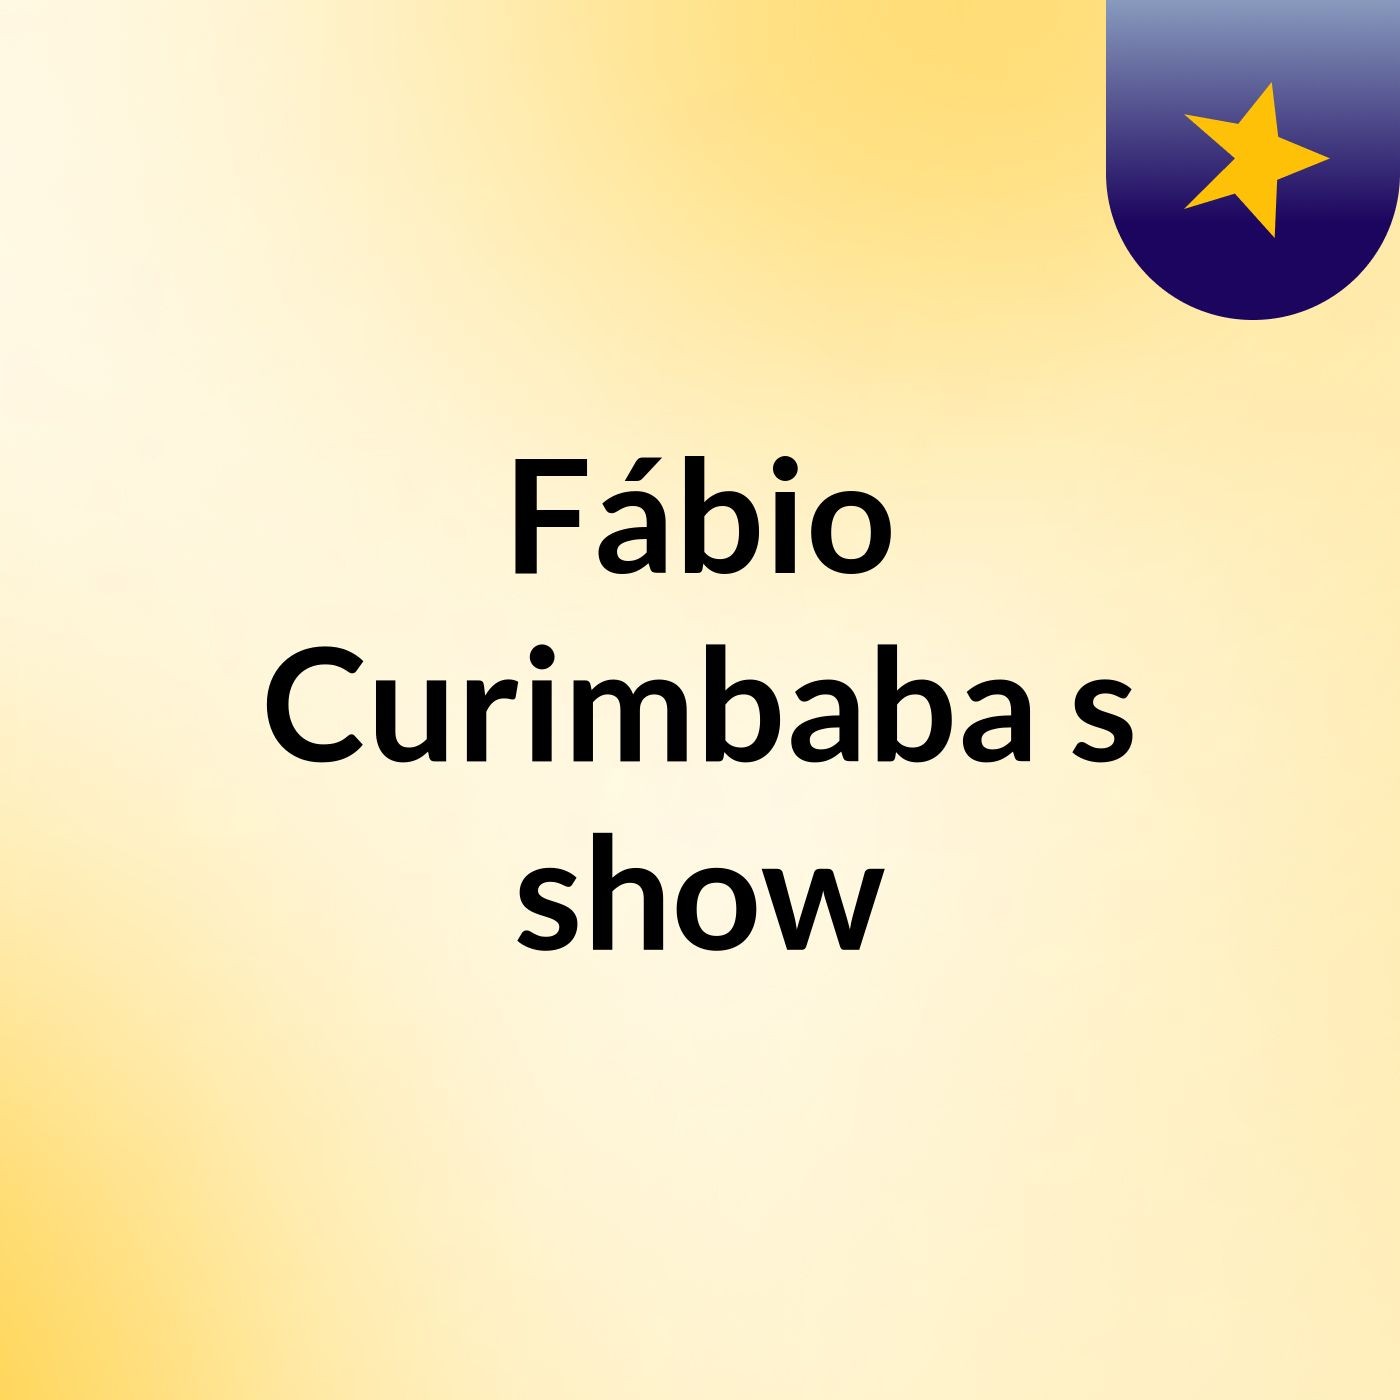 Fábio Curimbaba's show